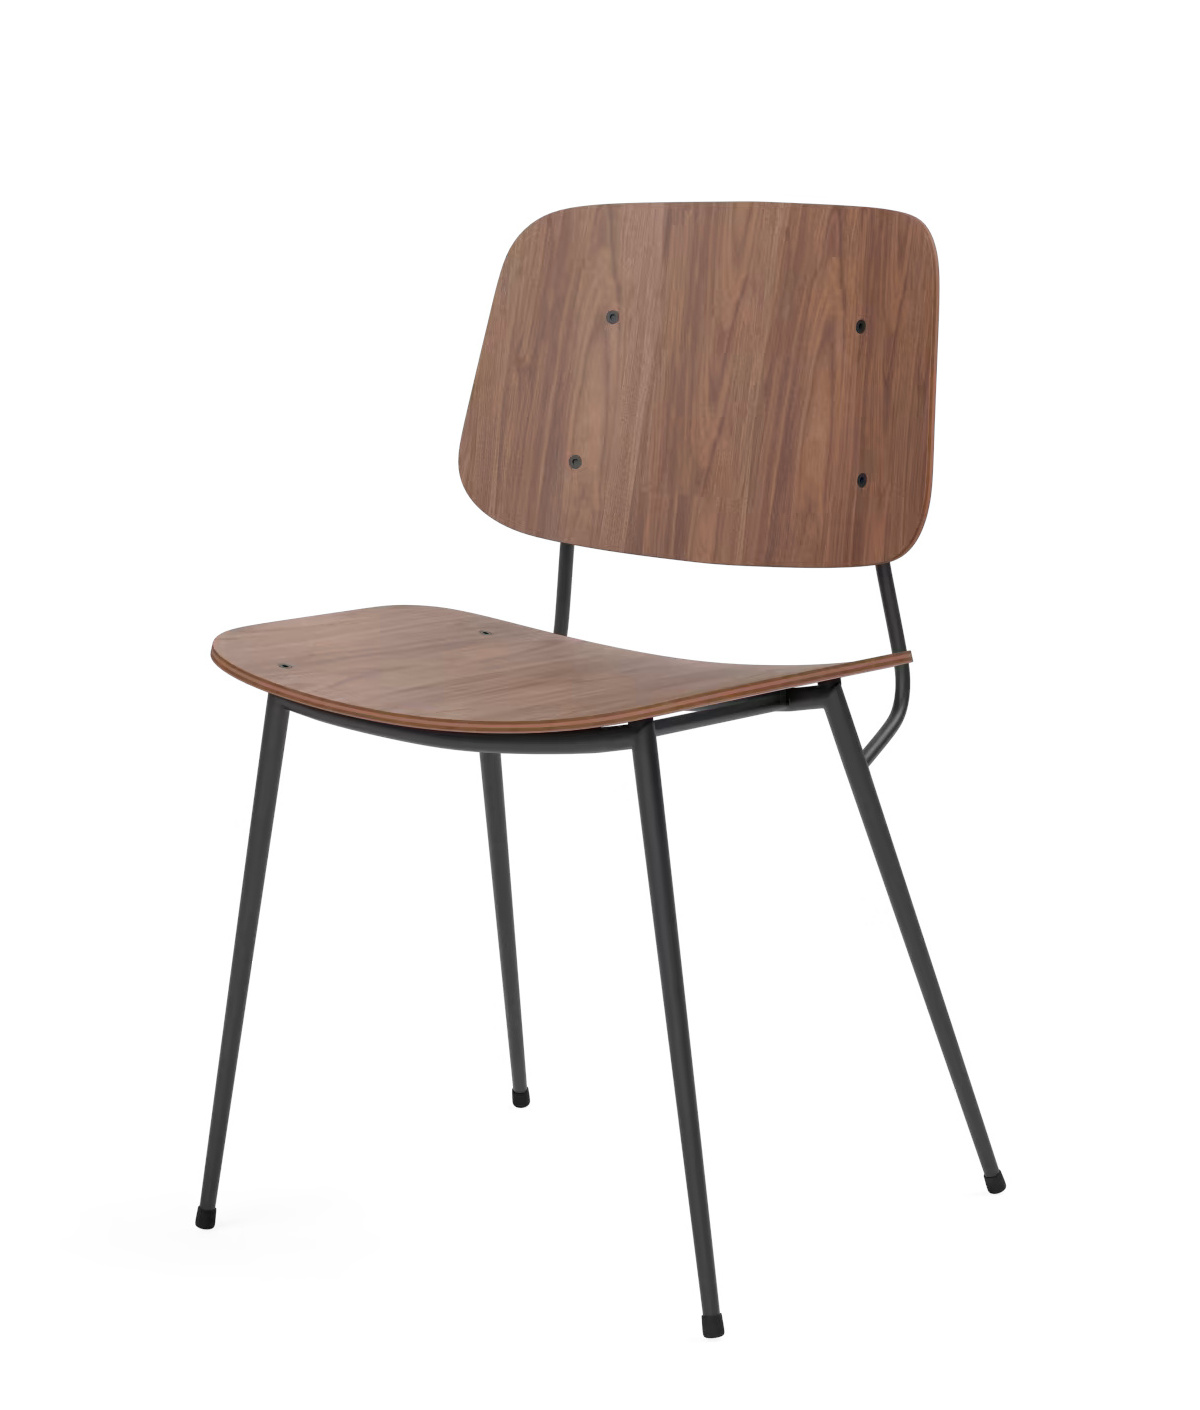 Søborg Metal Base Stuhl, chrom / eiche schwarz lackiert